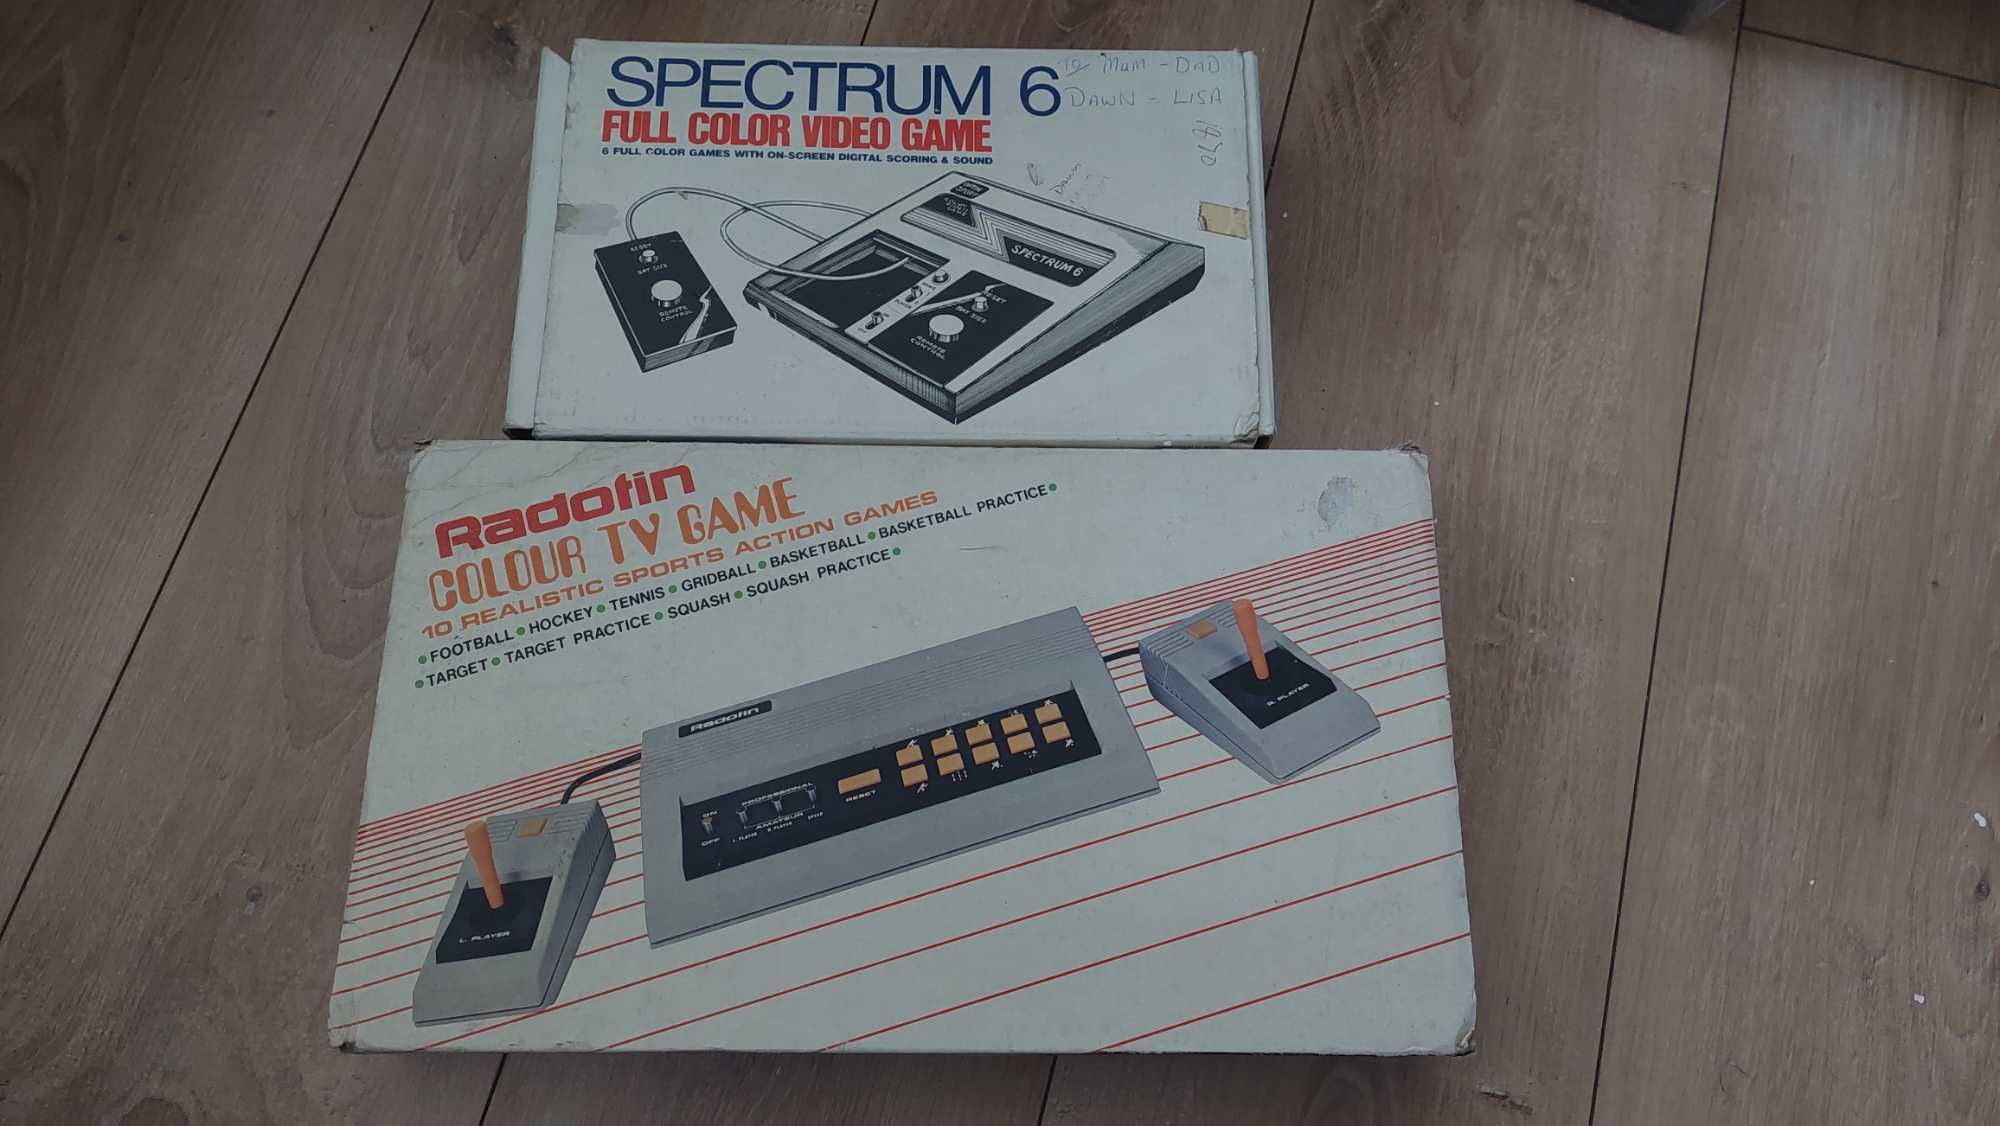 2 konsole typu Pong - Spectrum 6 oraz Radofin